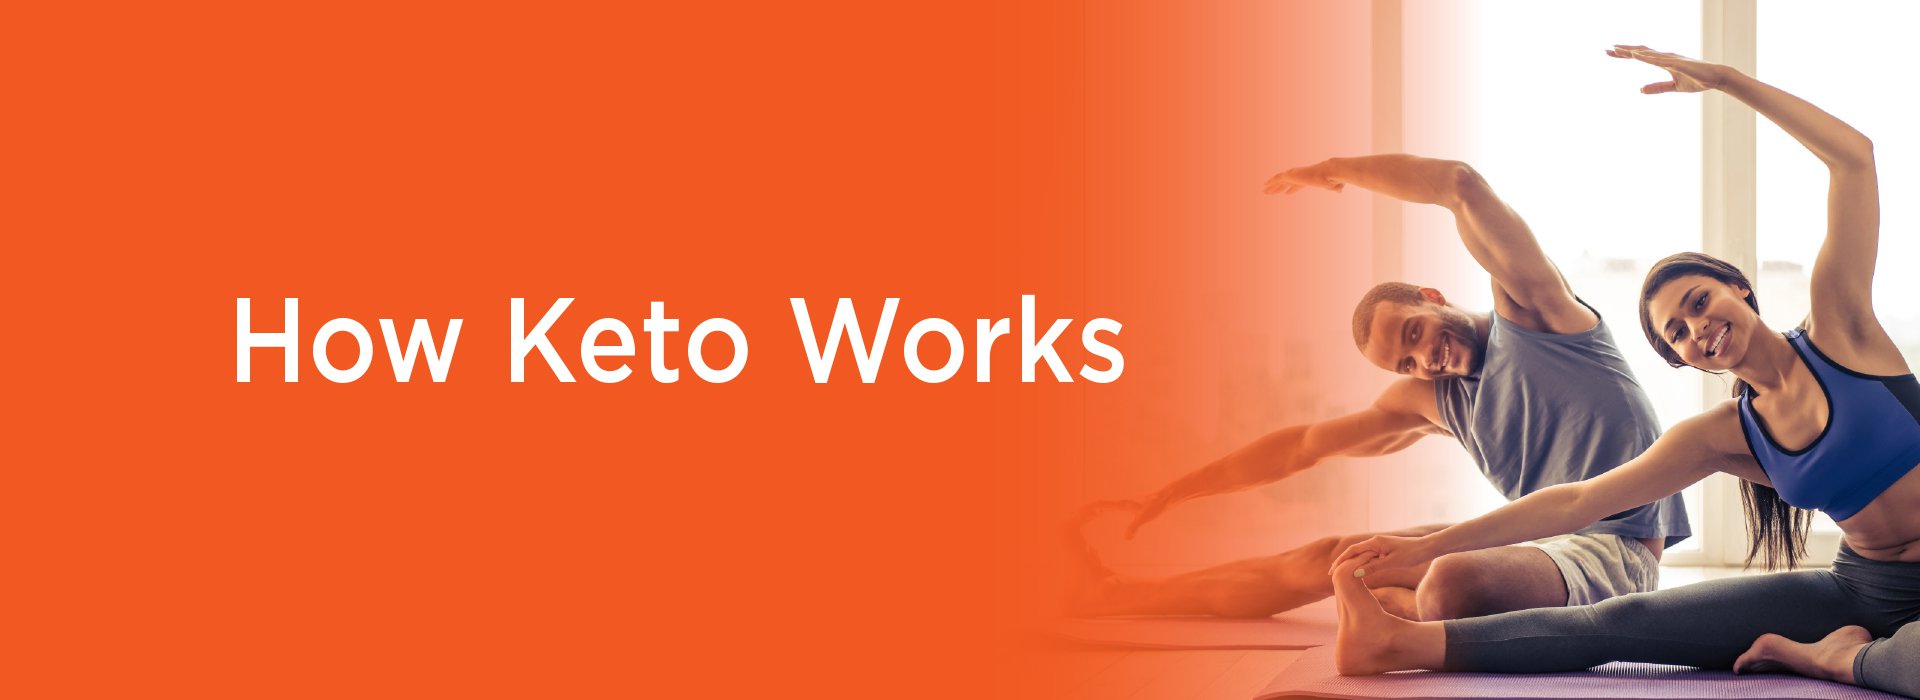 New Image International:How Keto Works